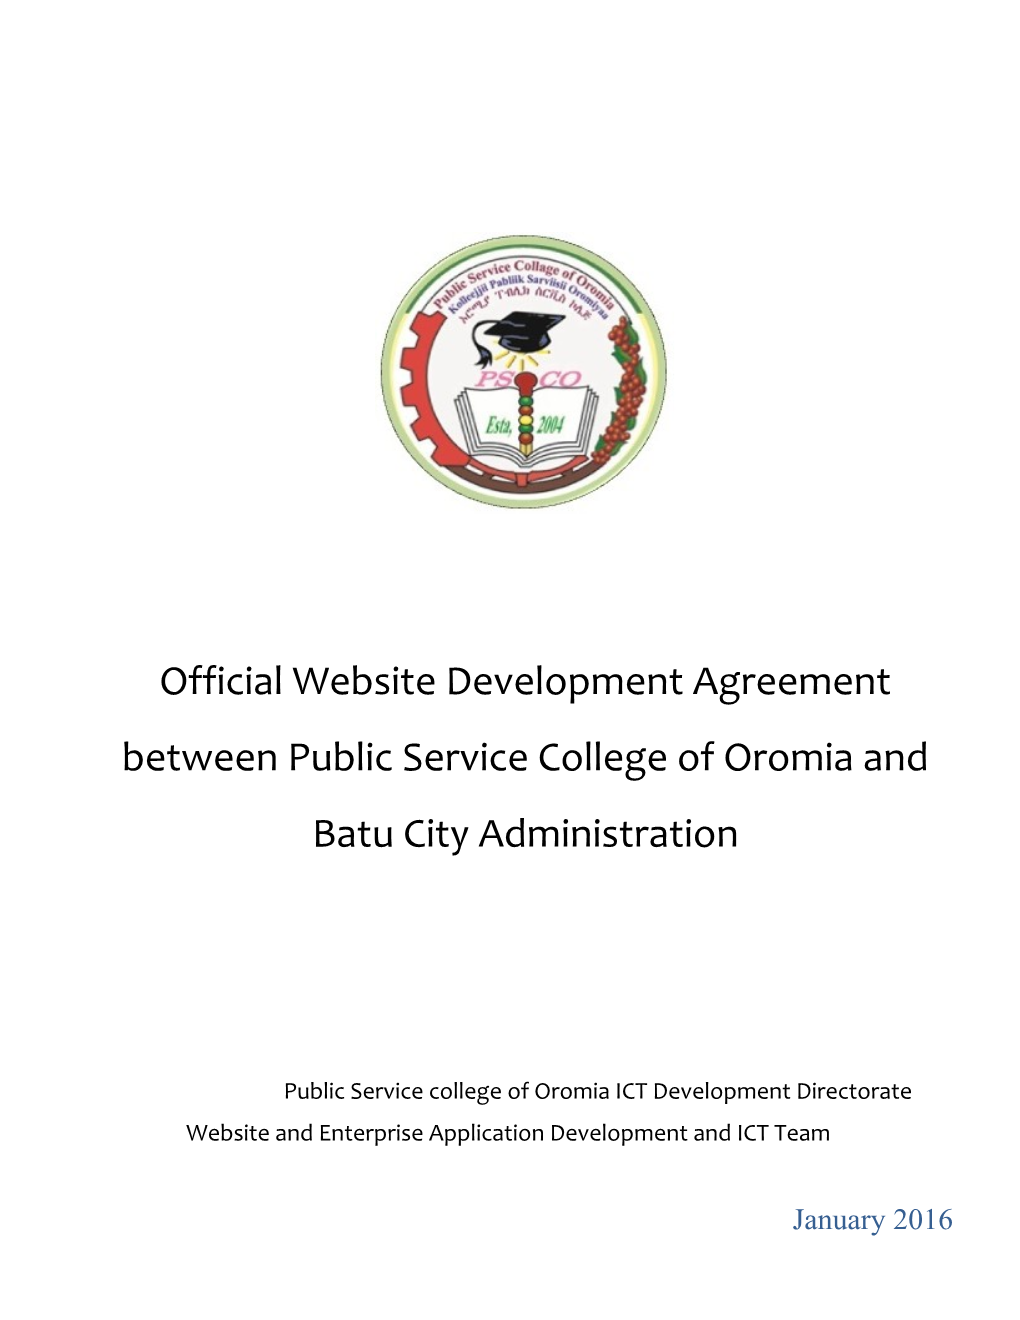 Public Service College of Oromia ICT Development Directorate